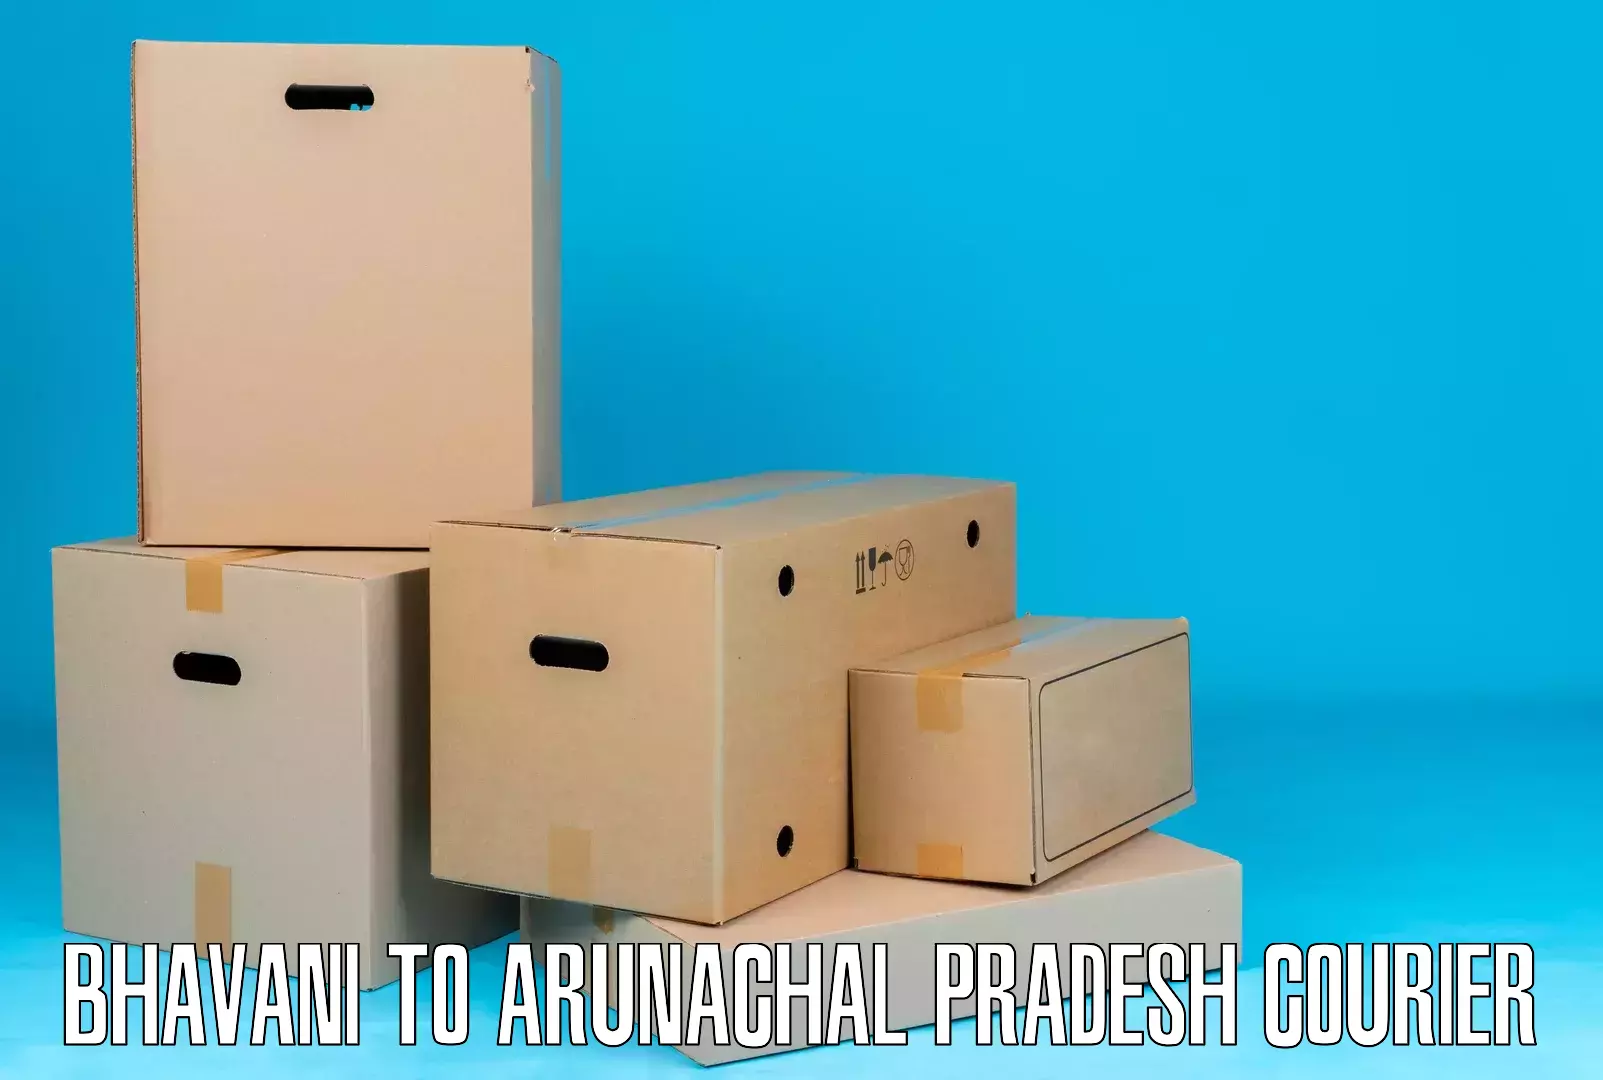 Package delivery network Bhavani to Arunachal Pradesh